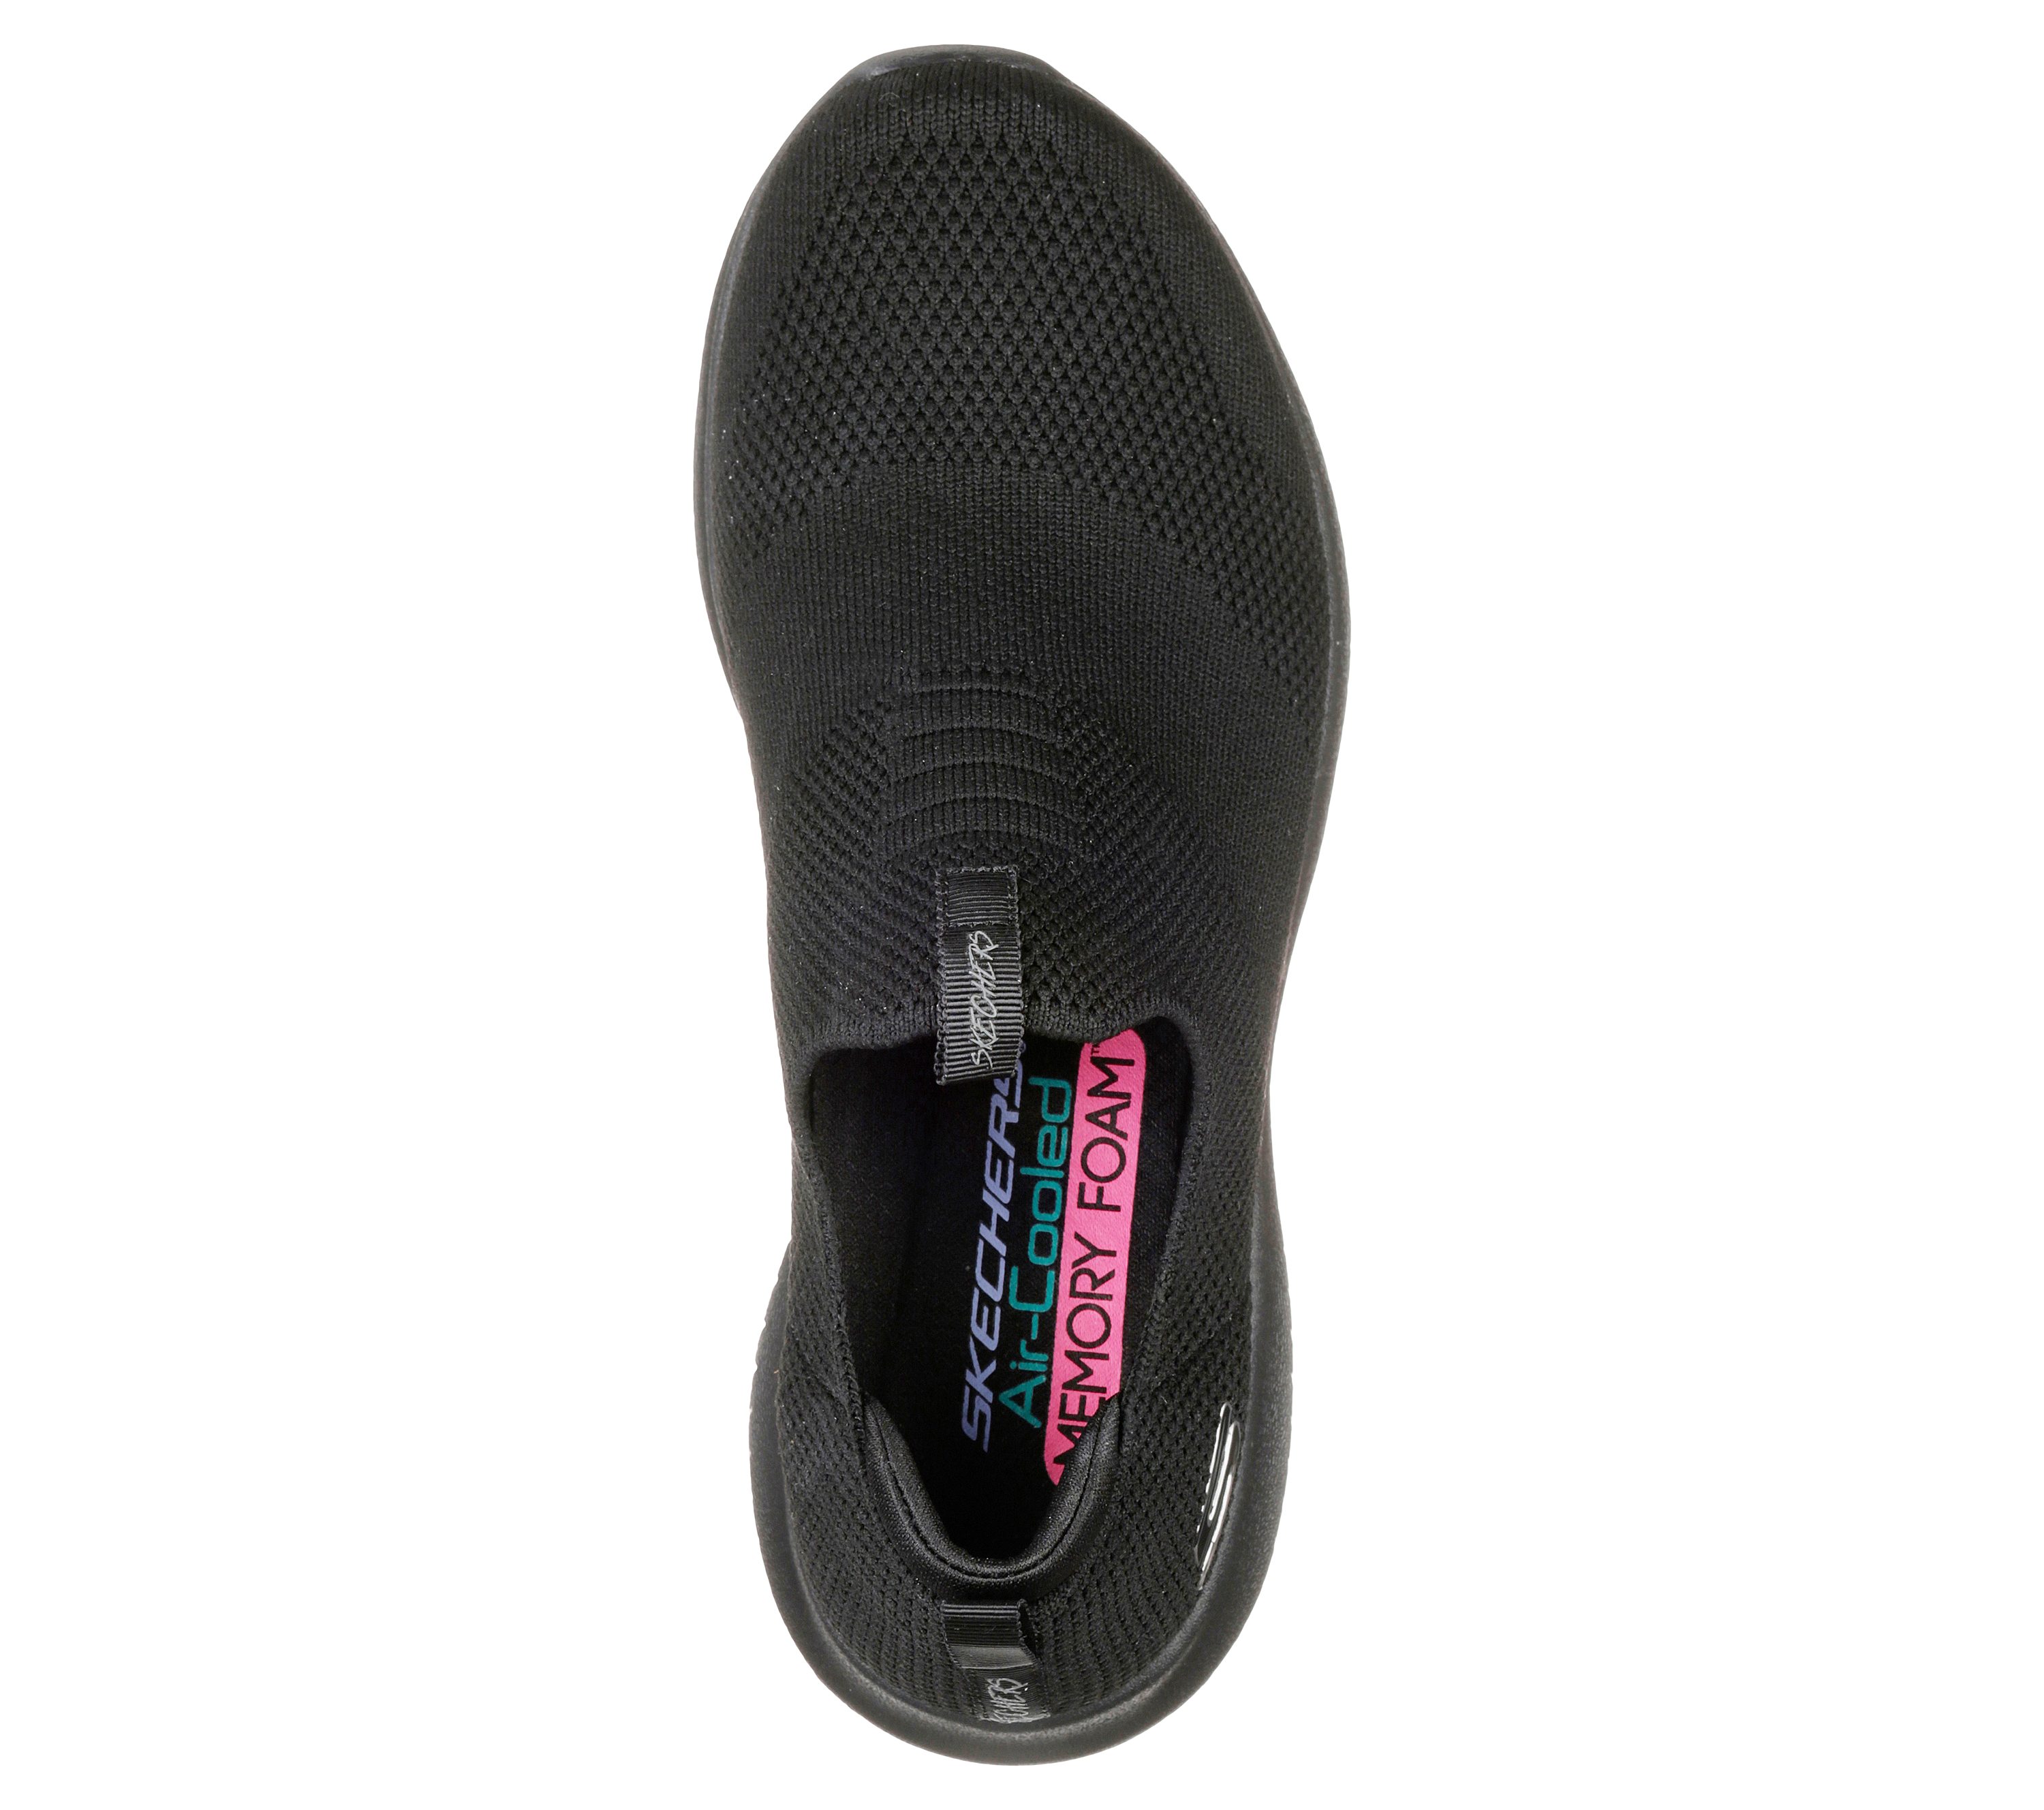 Skechers Women's Ultra Flex Shoe with Air Cooled Memory Foam Insole